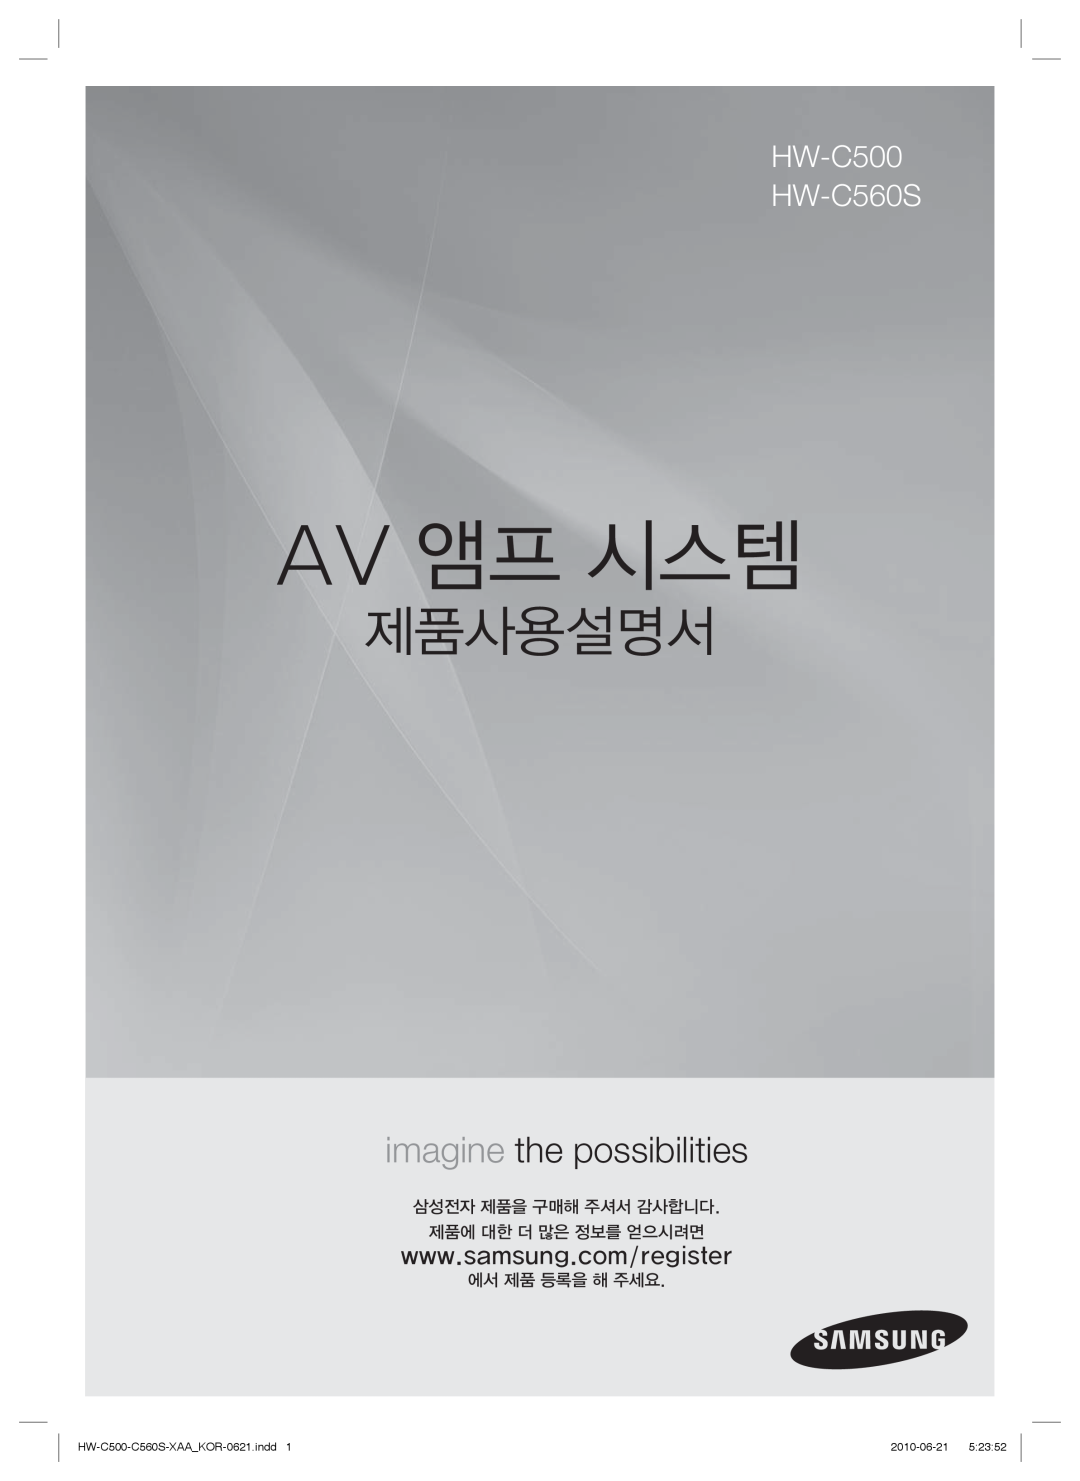 Samsung manual Av 앰프 시스템, 제품사용설명서, imagine the possibilities, HW-C500 HW-C560S, HW-C500-C560S-XAA KOR-0621.indd1 